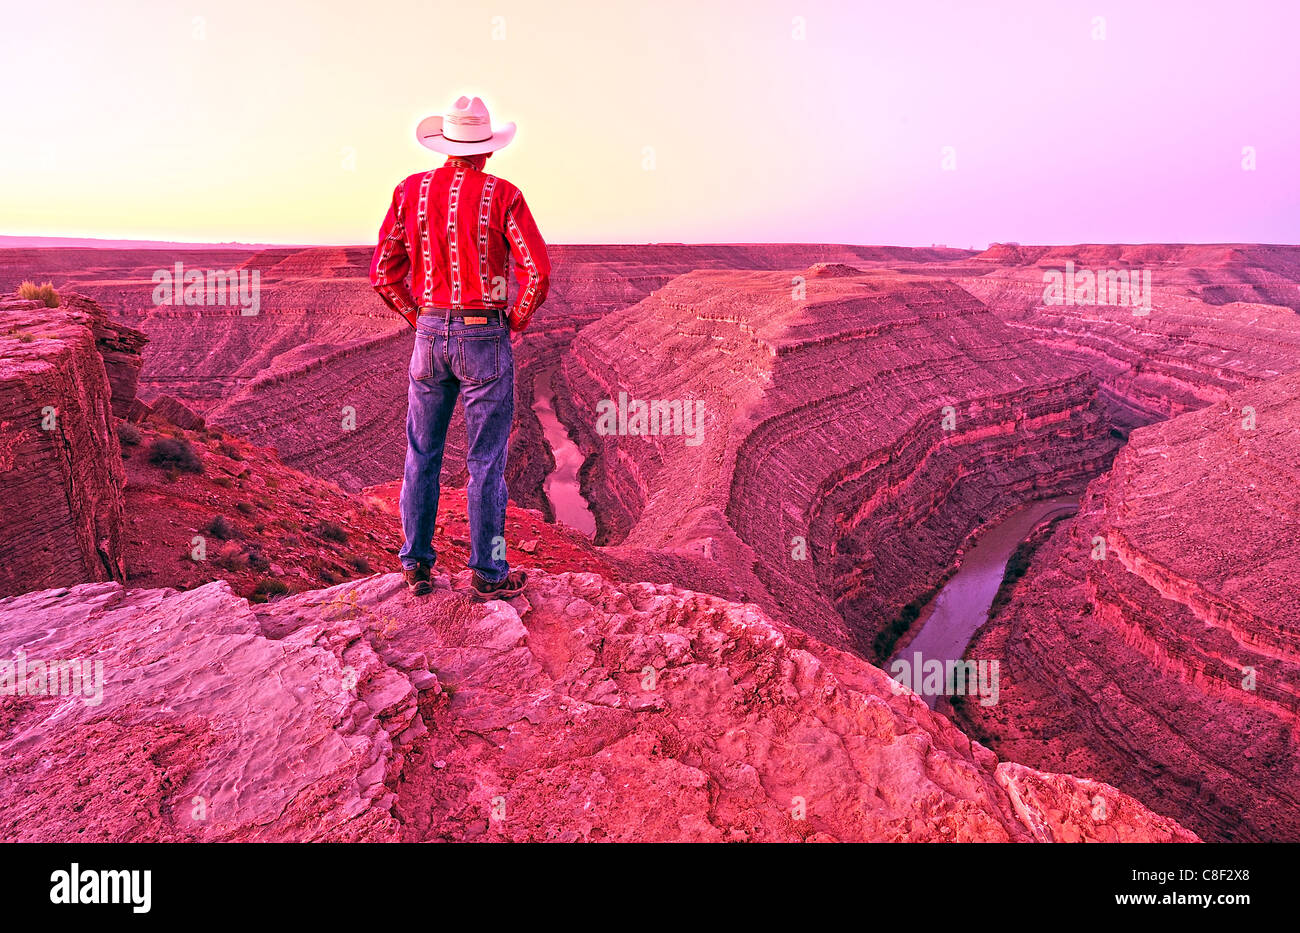 Snodi, Parco Statale, il fiume San Juan, Colorado Plateau, Utah, Stati Uniti d'America, Stati Uniti, America, uomo, cercando, canyon, cowboy Foto Stock